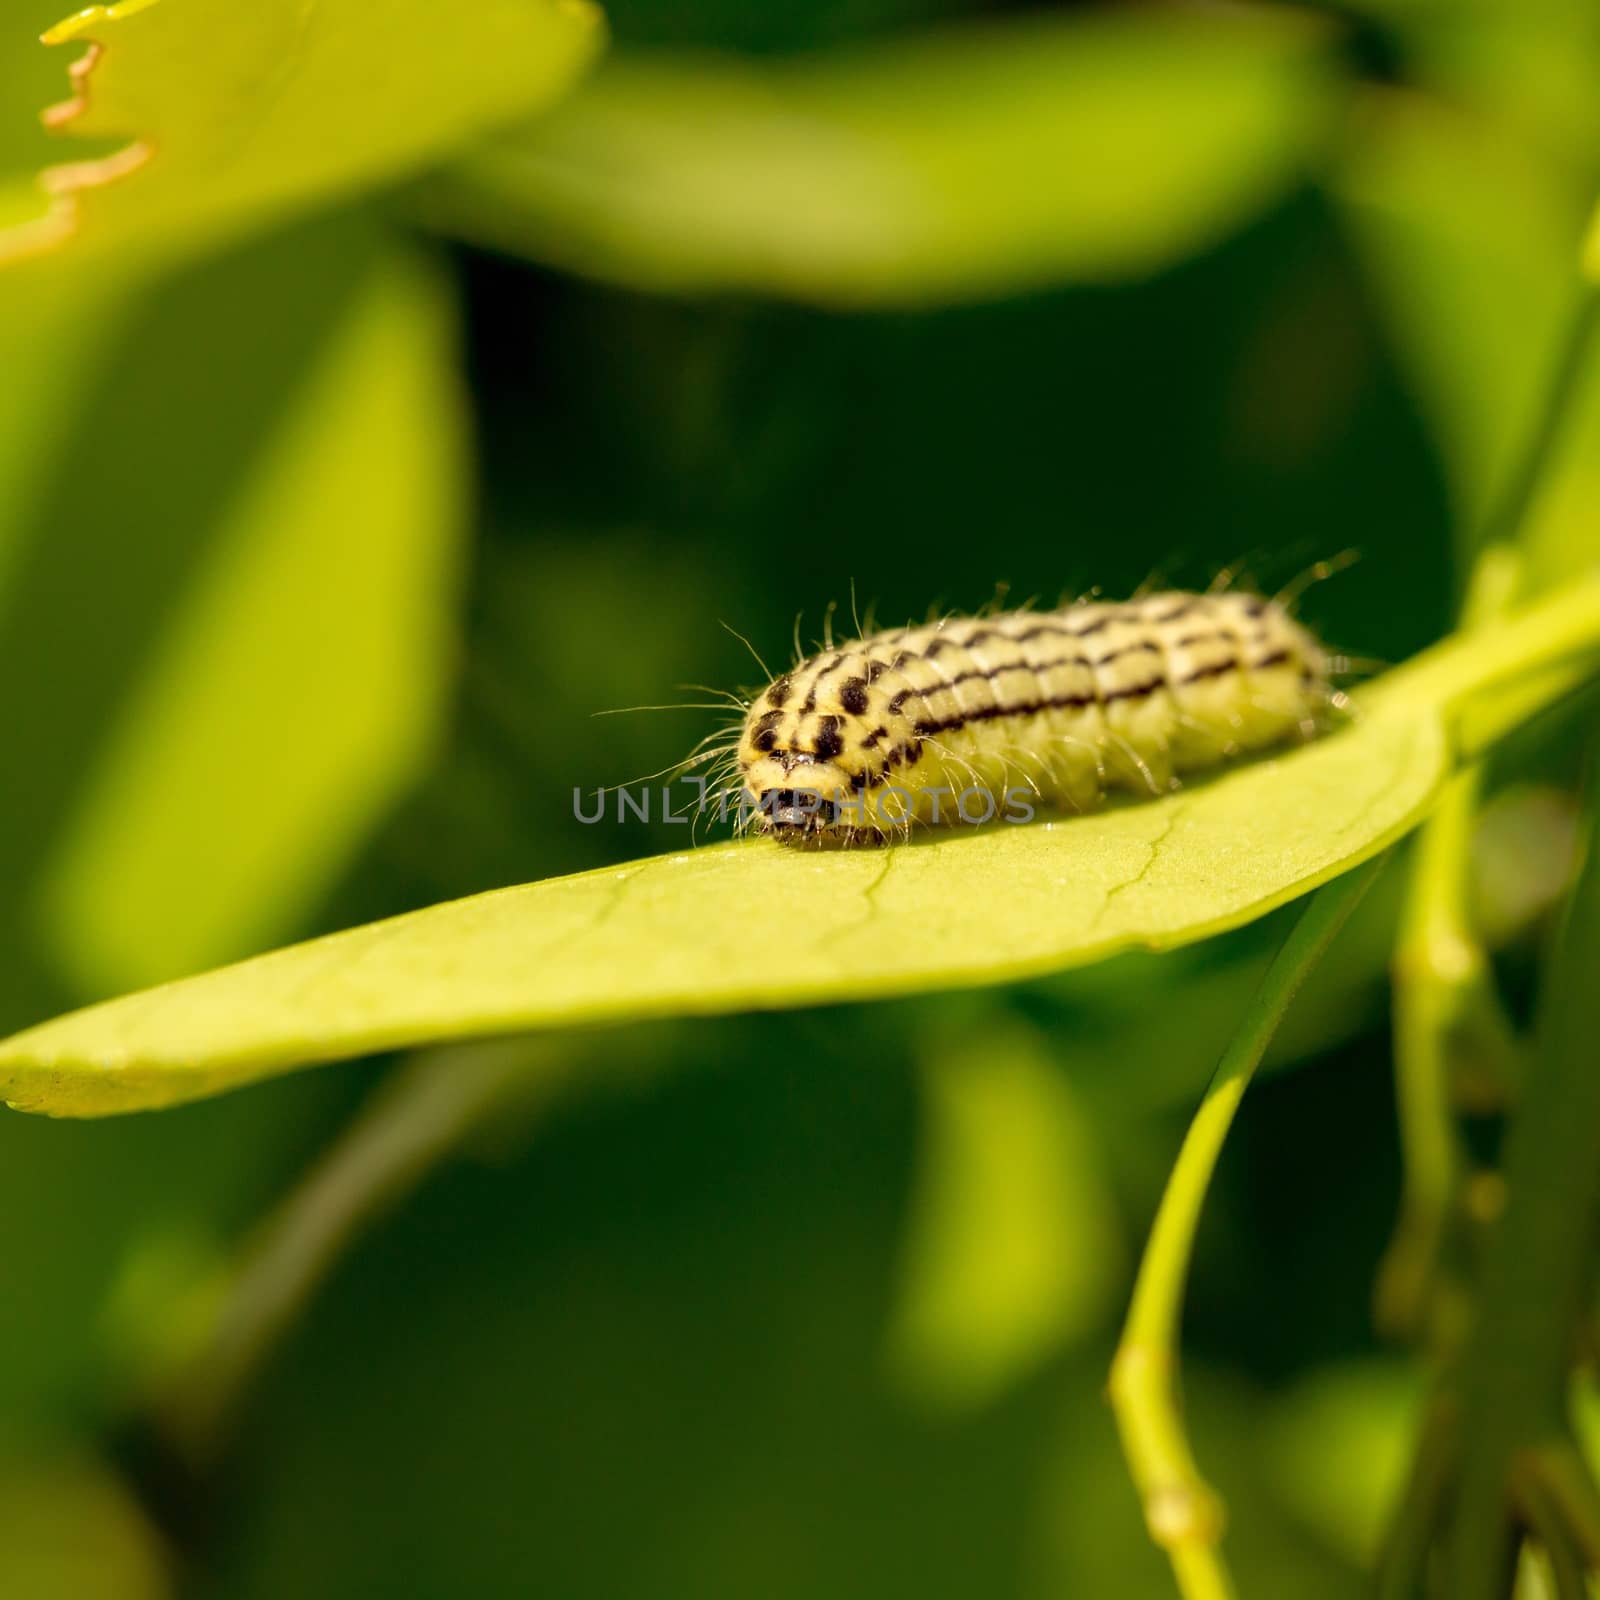 Macro shot of a white caterpillar walking along a bright green leaf.